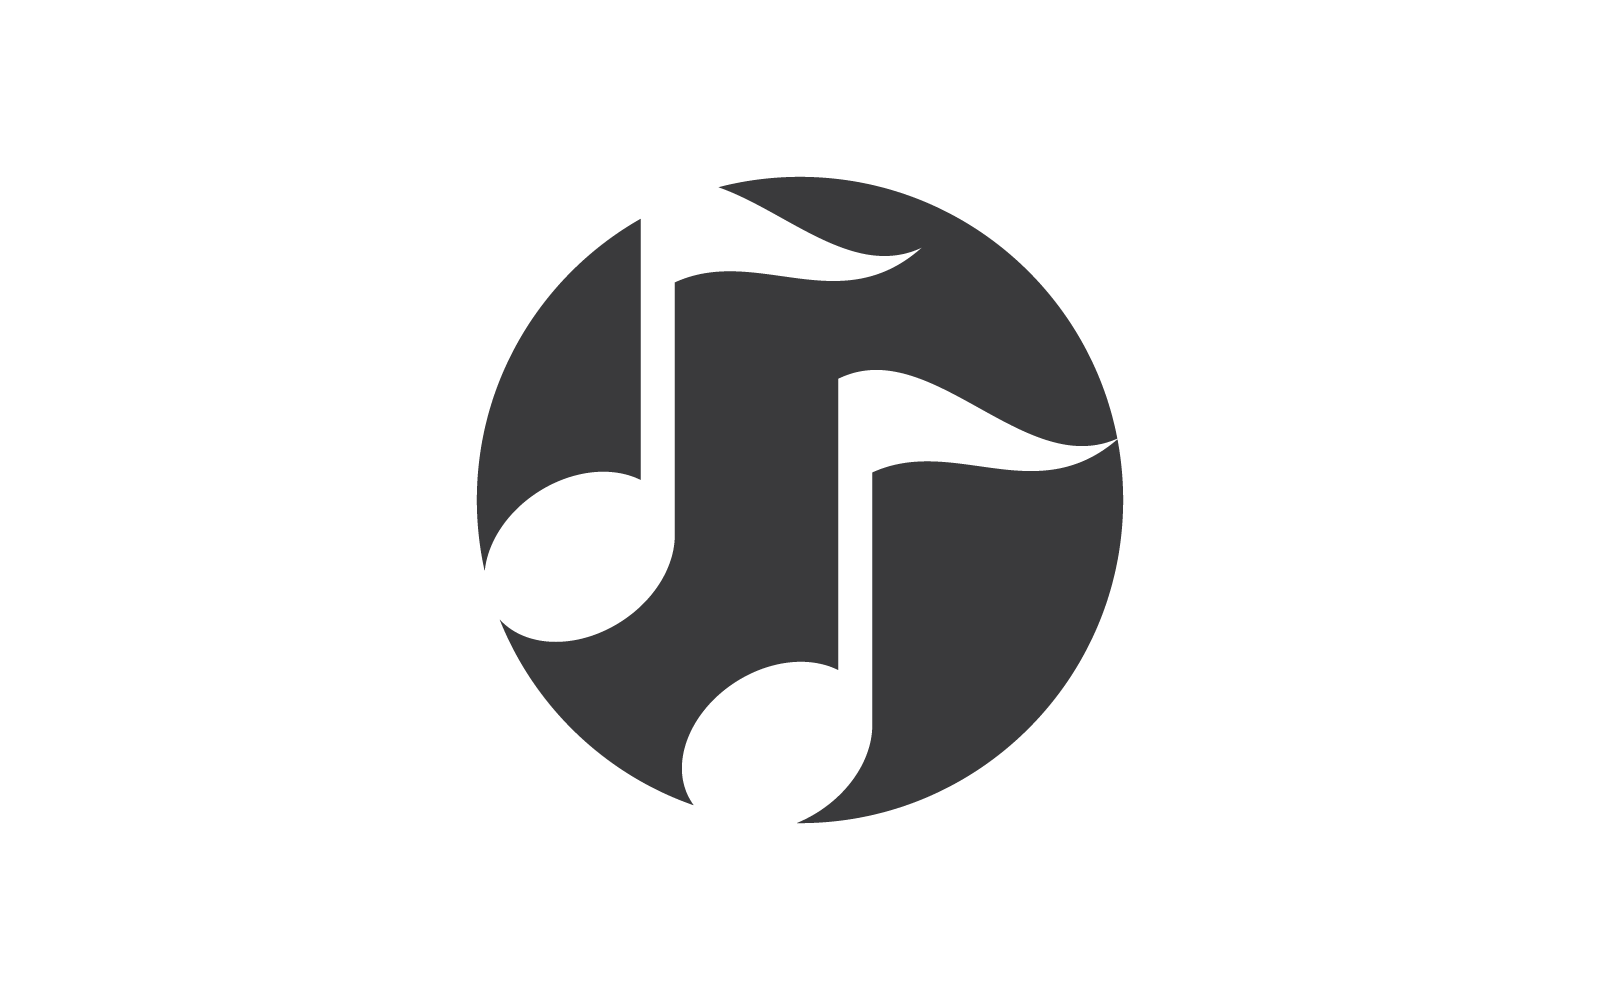 Music note logo illustration design